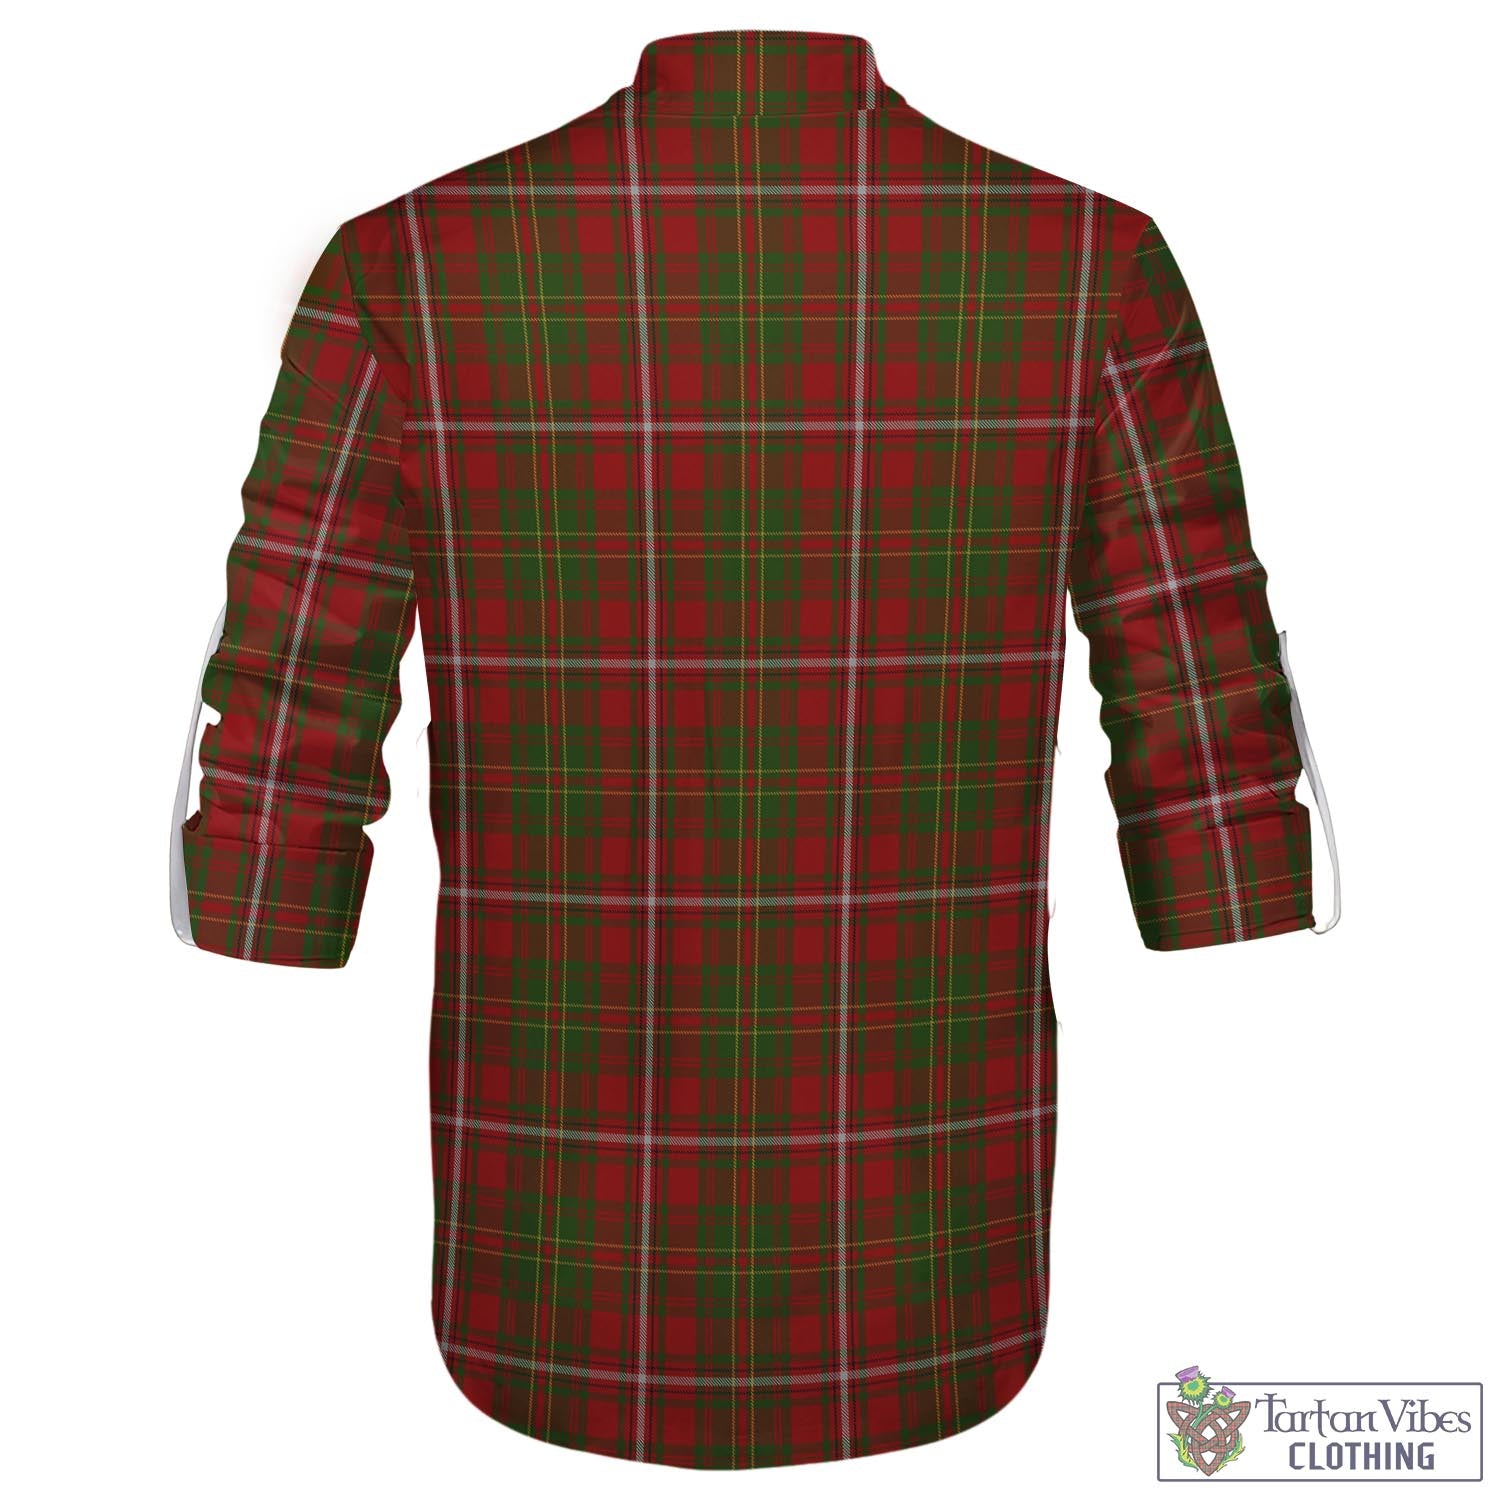 Tartan Vibes Clothing Hay Tartan Men's Scottish Traditional Jacobite Ghillie Kilt Shirt with Family Crest